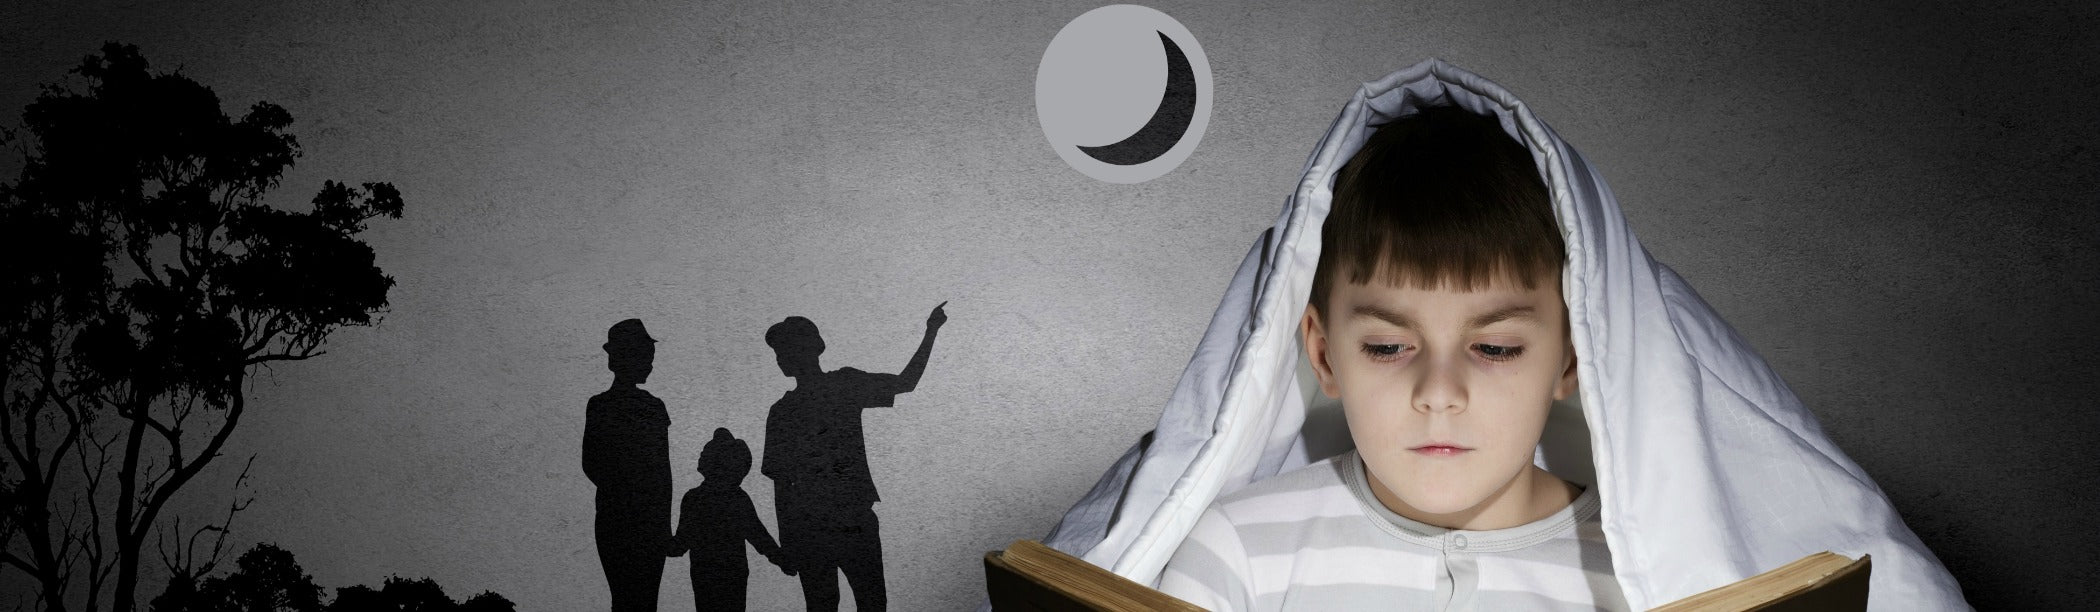 Back to School, Back to Sleep – Make Sleep a Family Priority This Fall